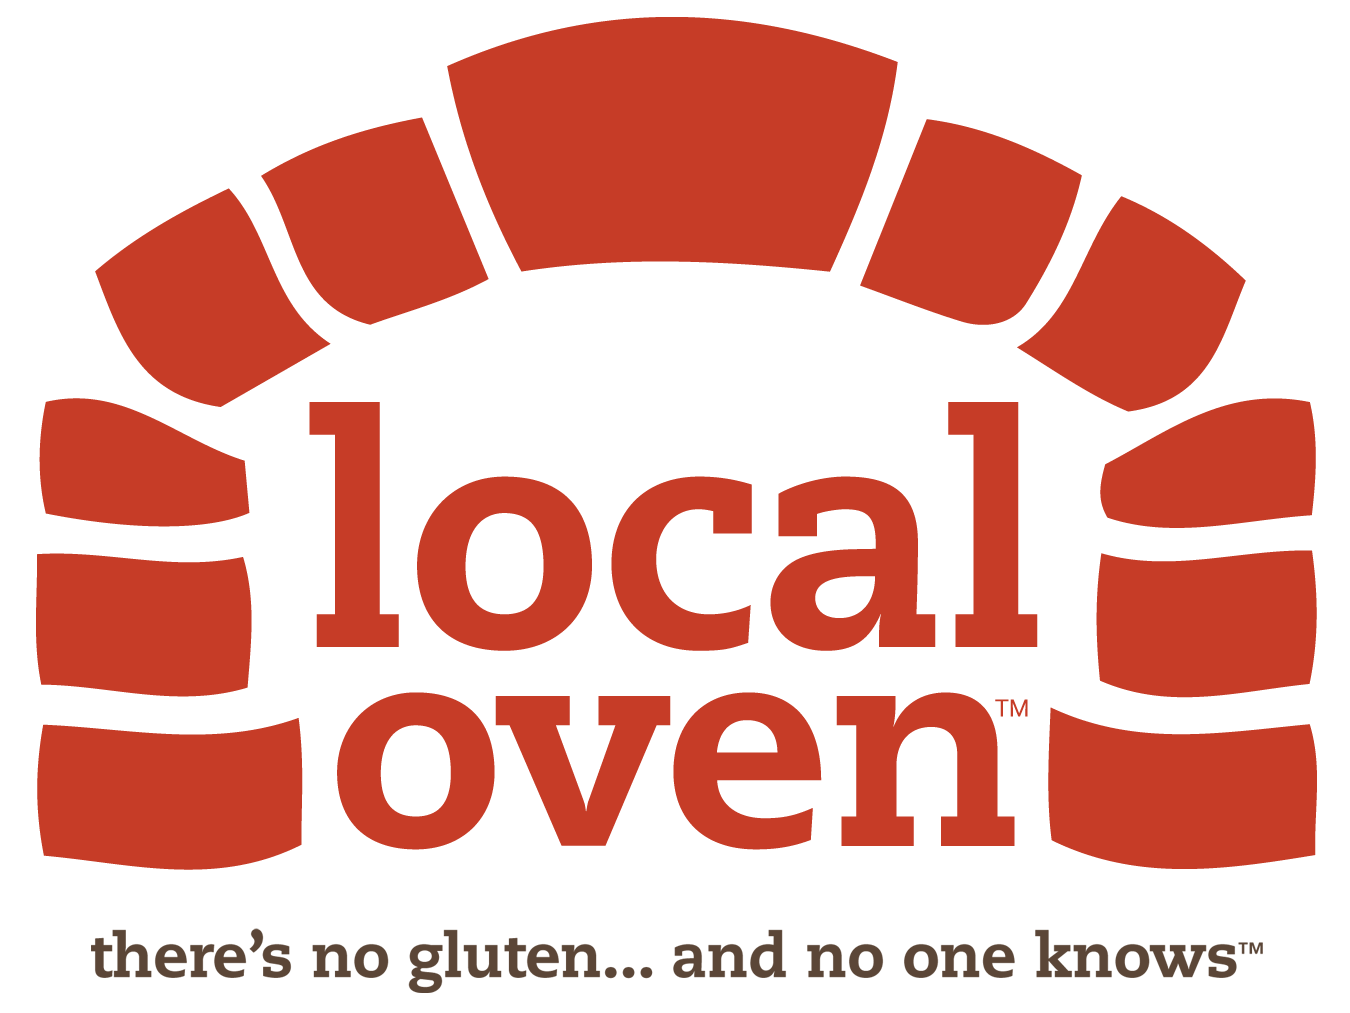 Local Oven logo